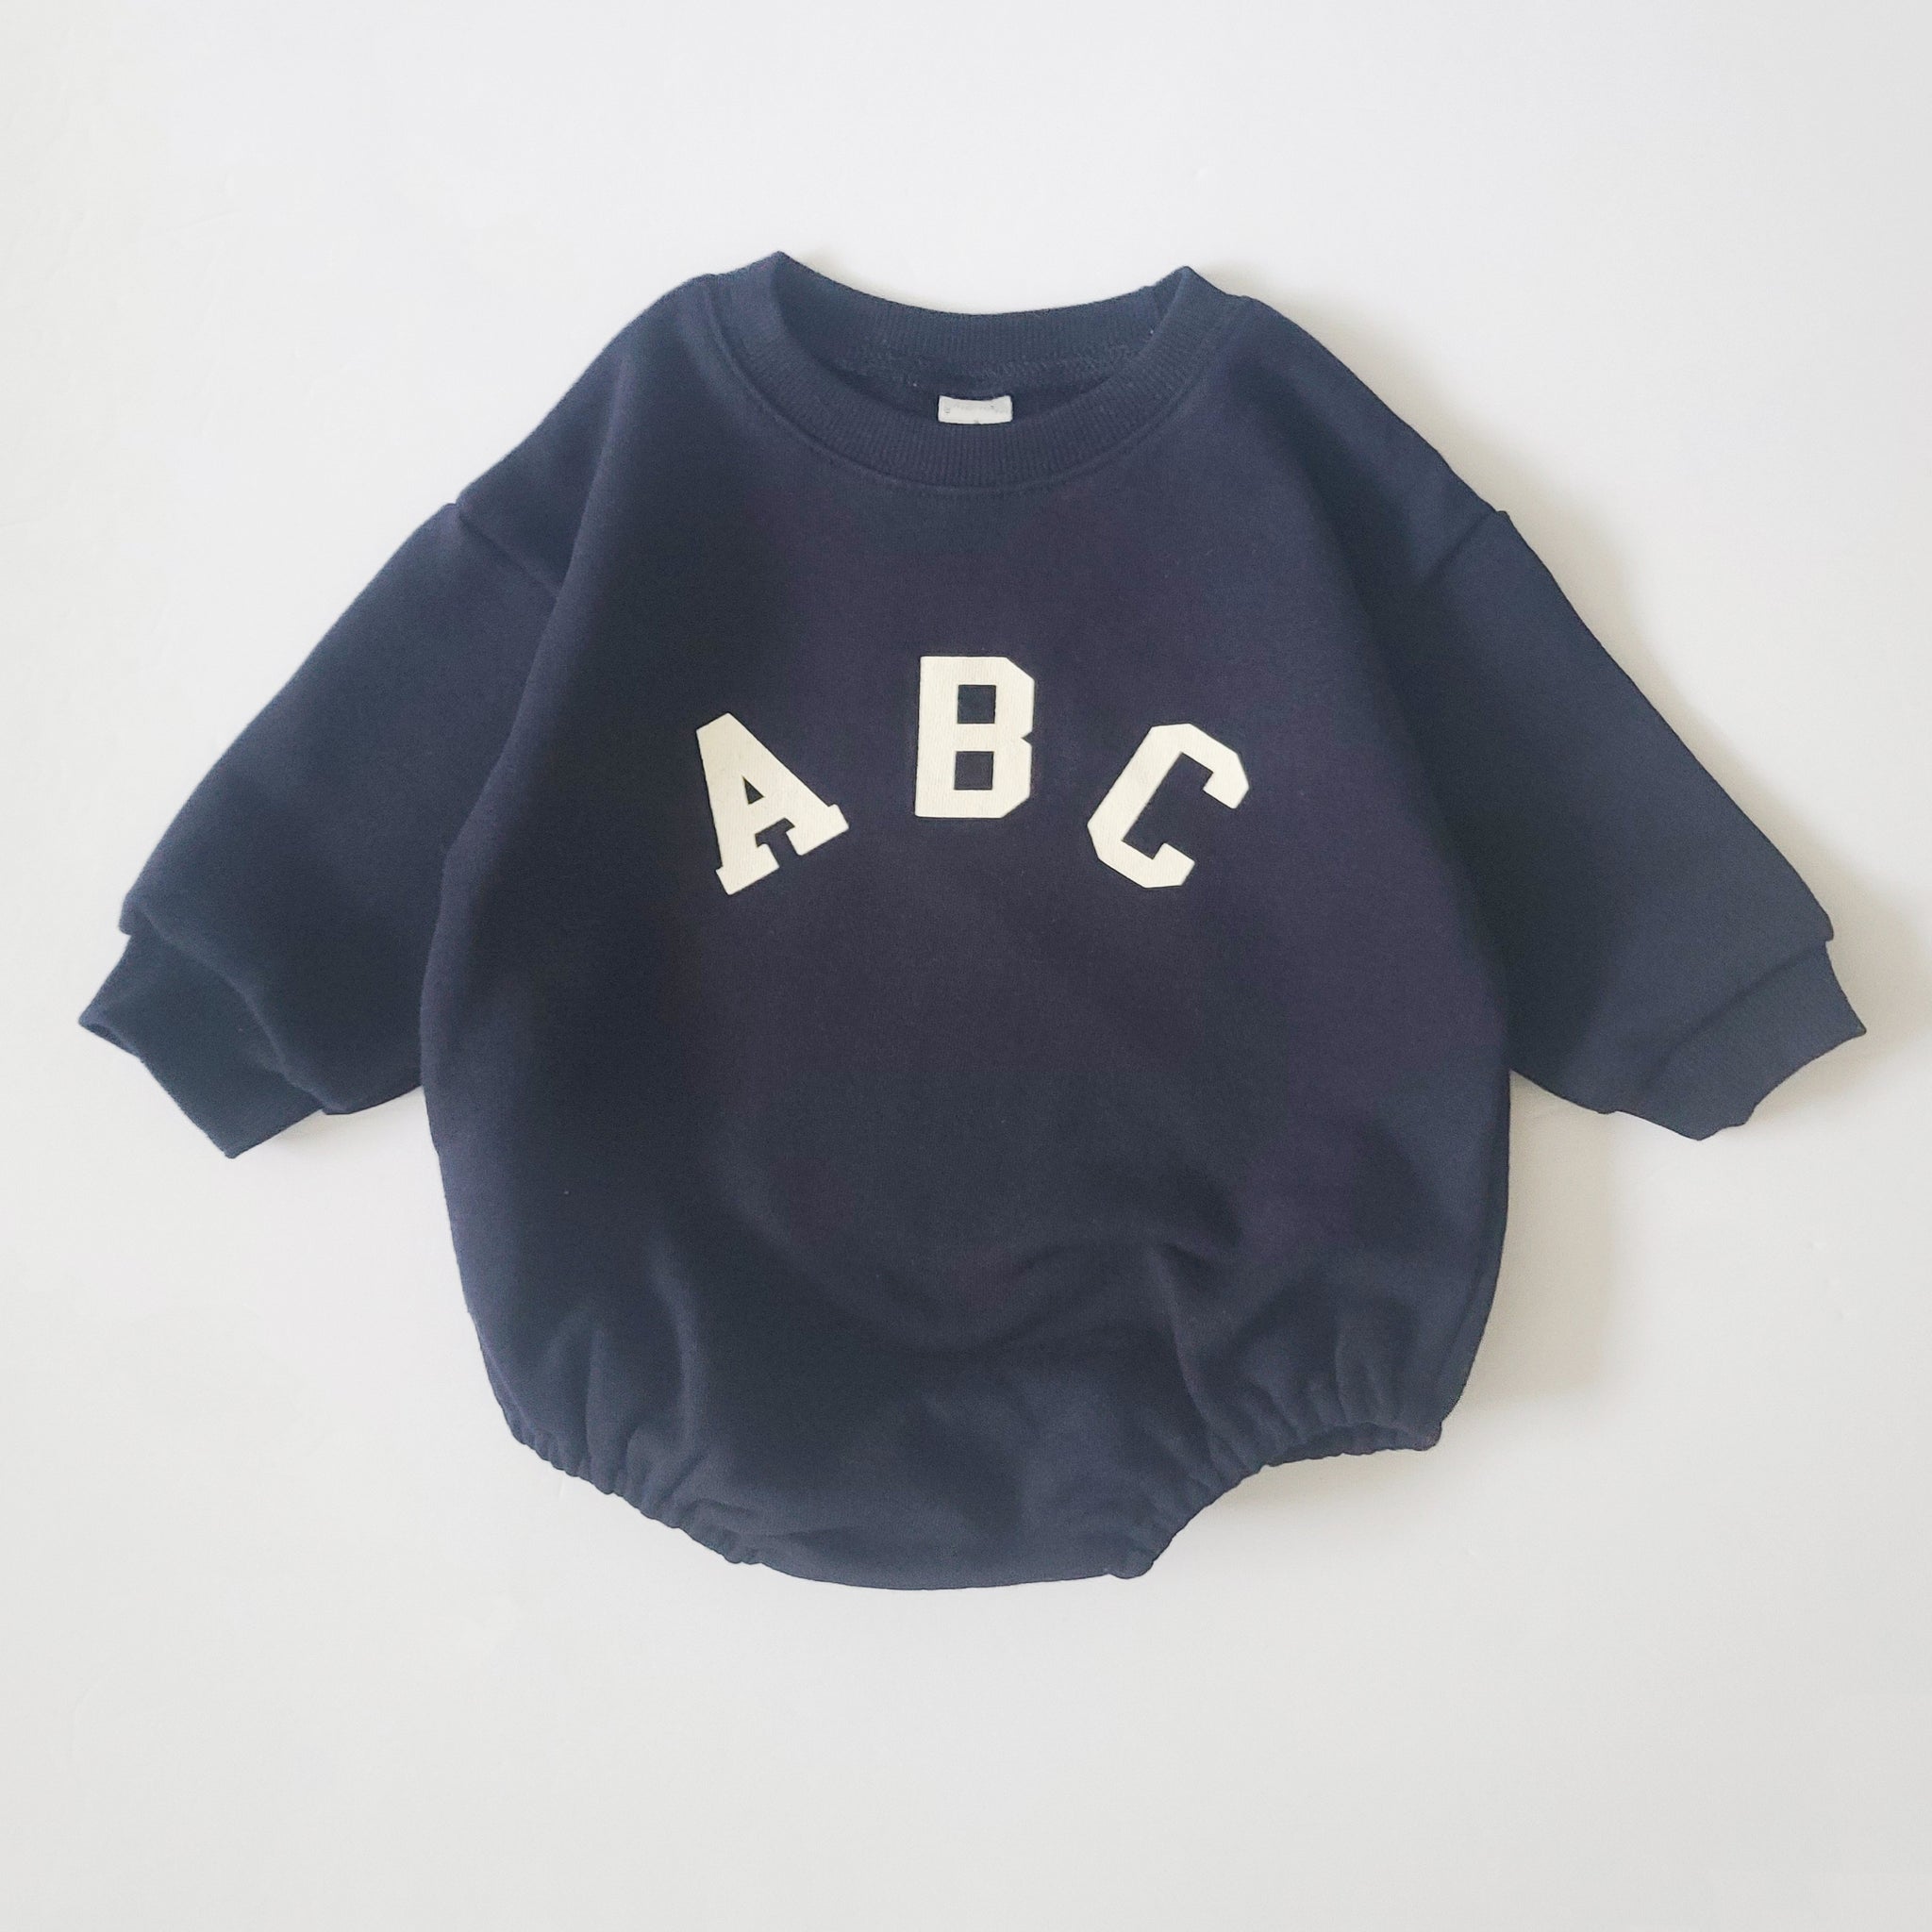 Baby ABC Sweatshirt Romper (3-12m) - Navy - AT NOON STORE